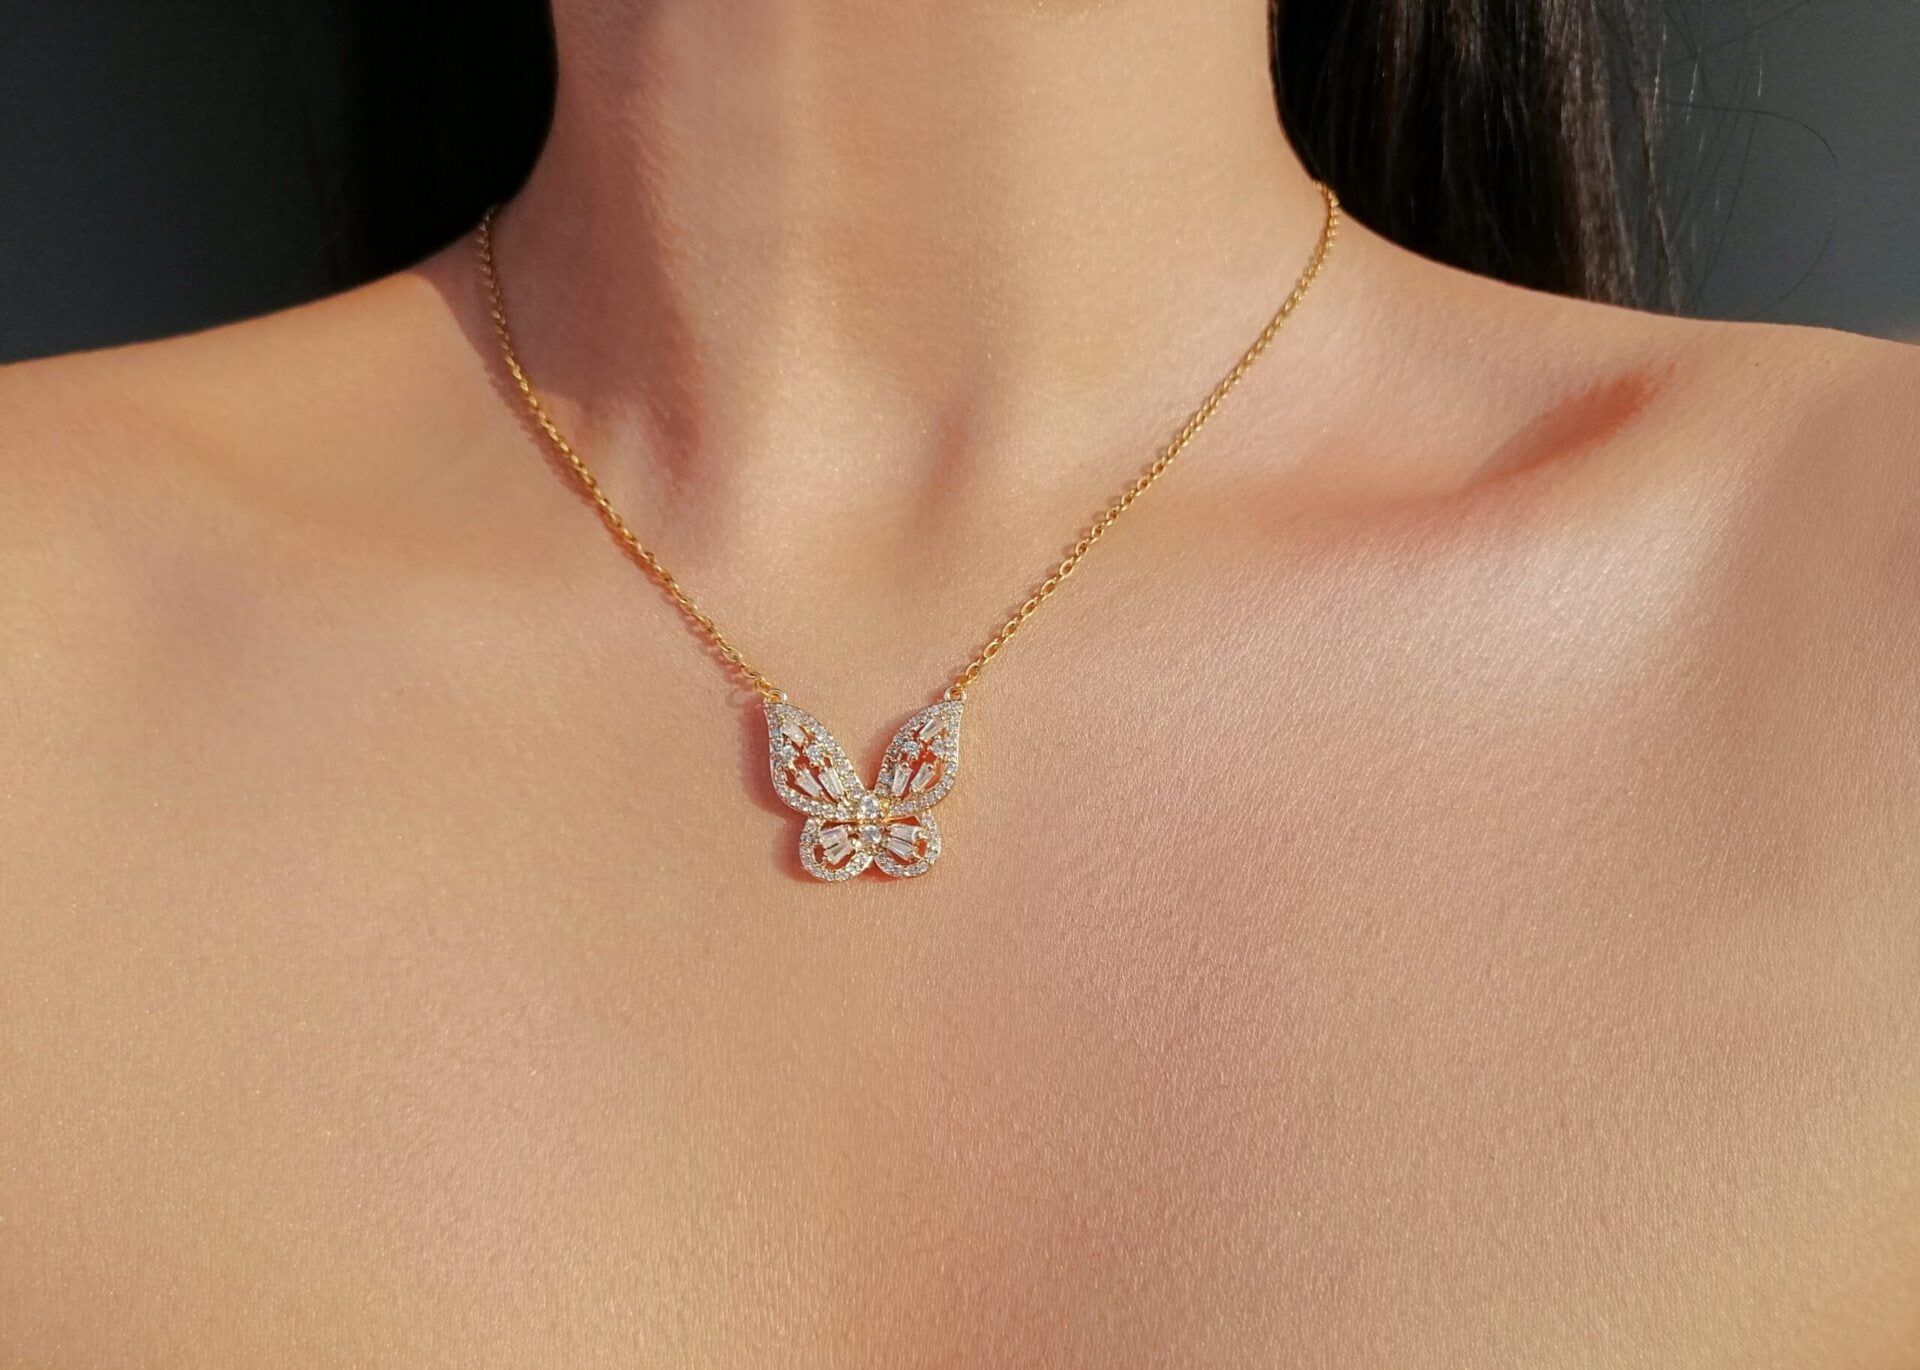 Enchanting 24K Butterfly Pendant Necklace | Handmade in Europe | Hypoallergenic & Durable | Sparkling Cubic Zirconia Inlaid | 43 cm + 5.5 cm Adjustable Length Bijou Her